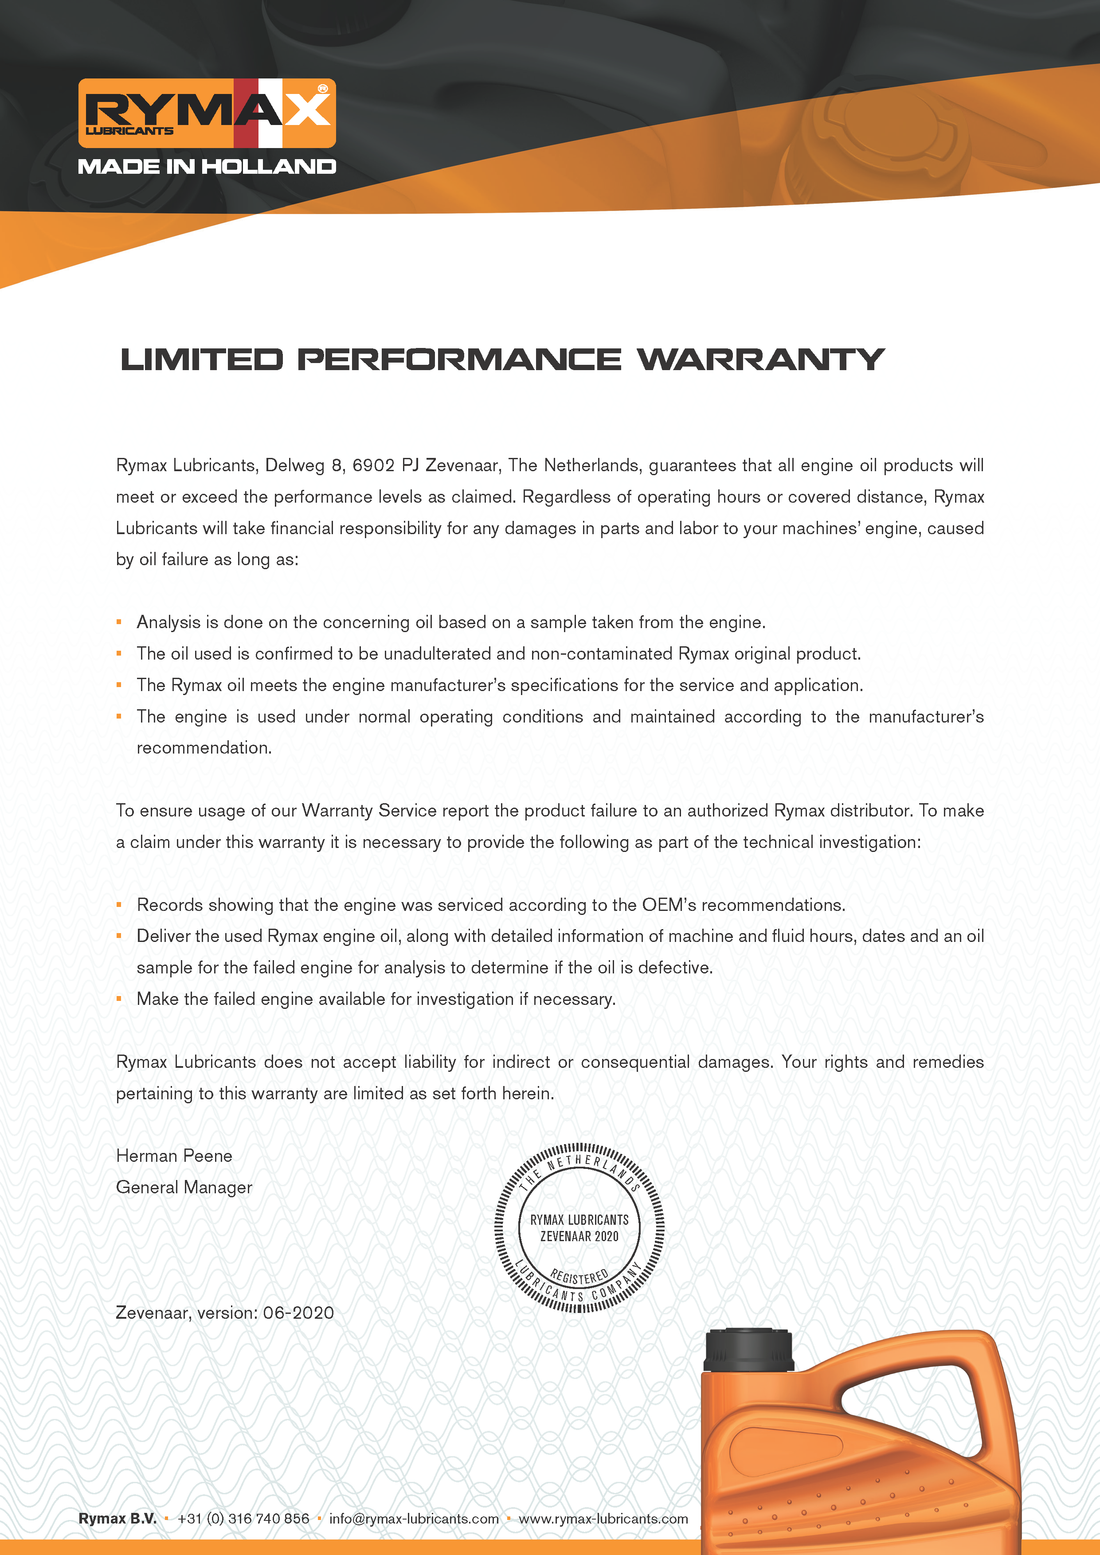 Rymax Lubricants Limited Performance Warranty